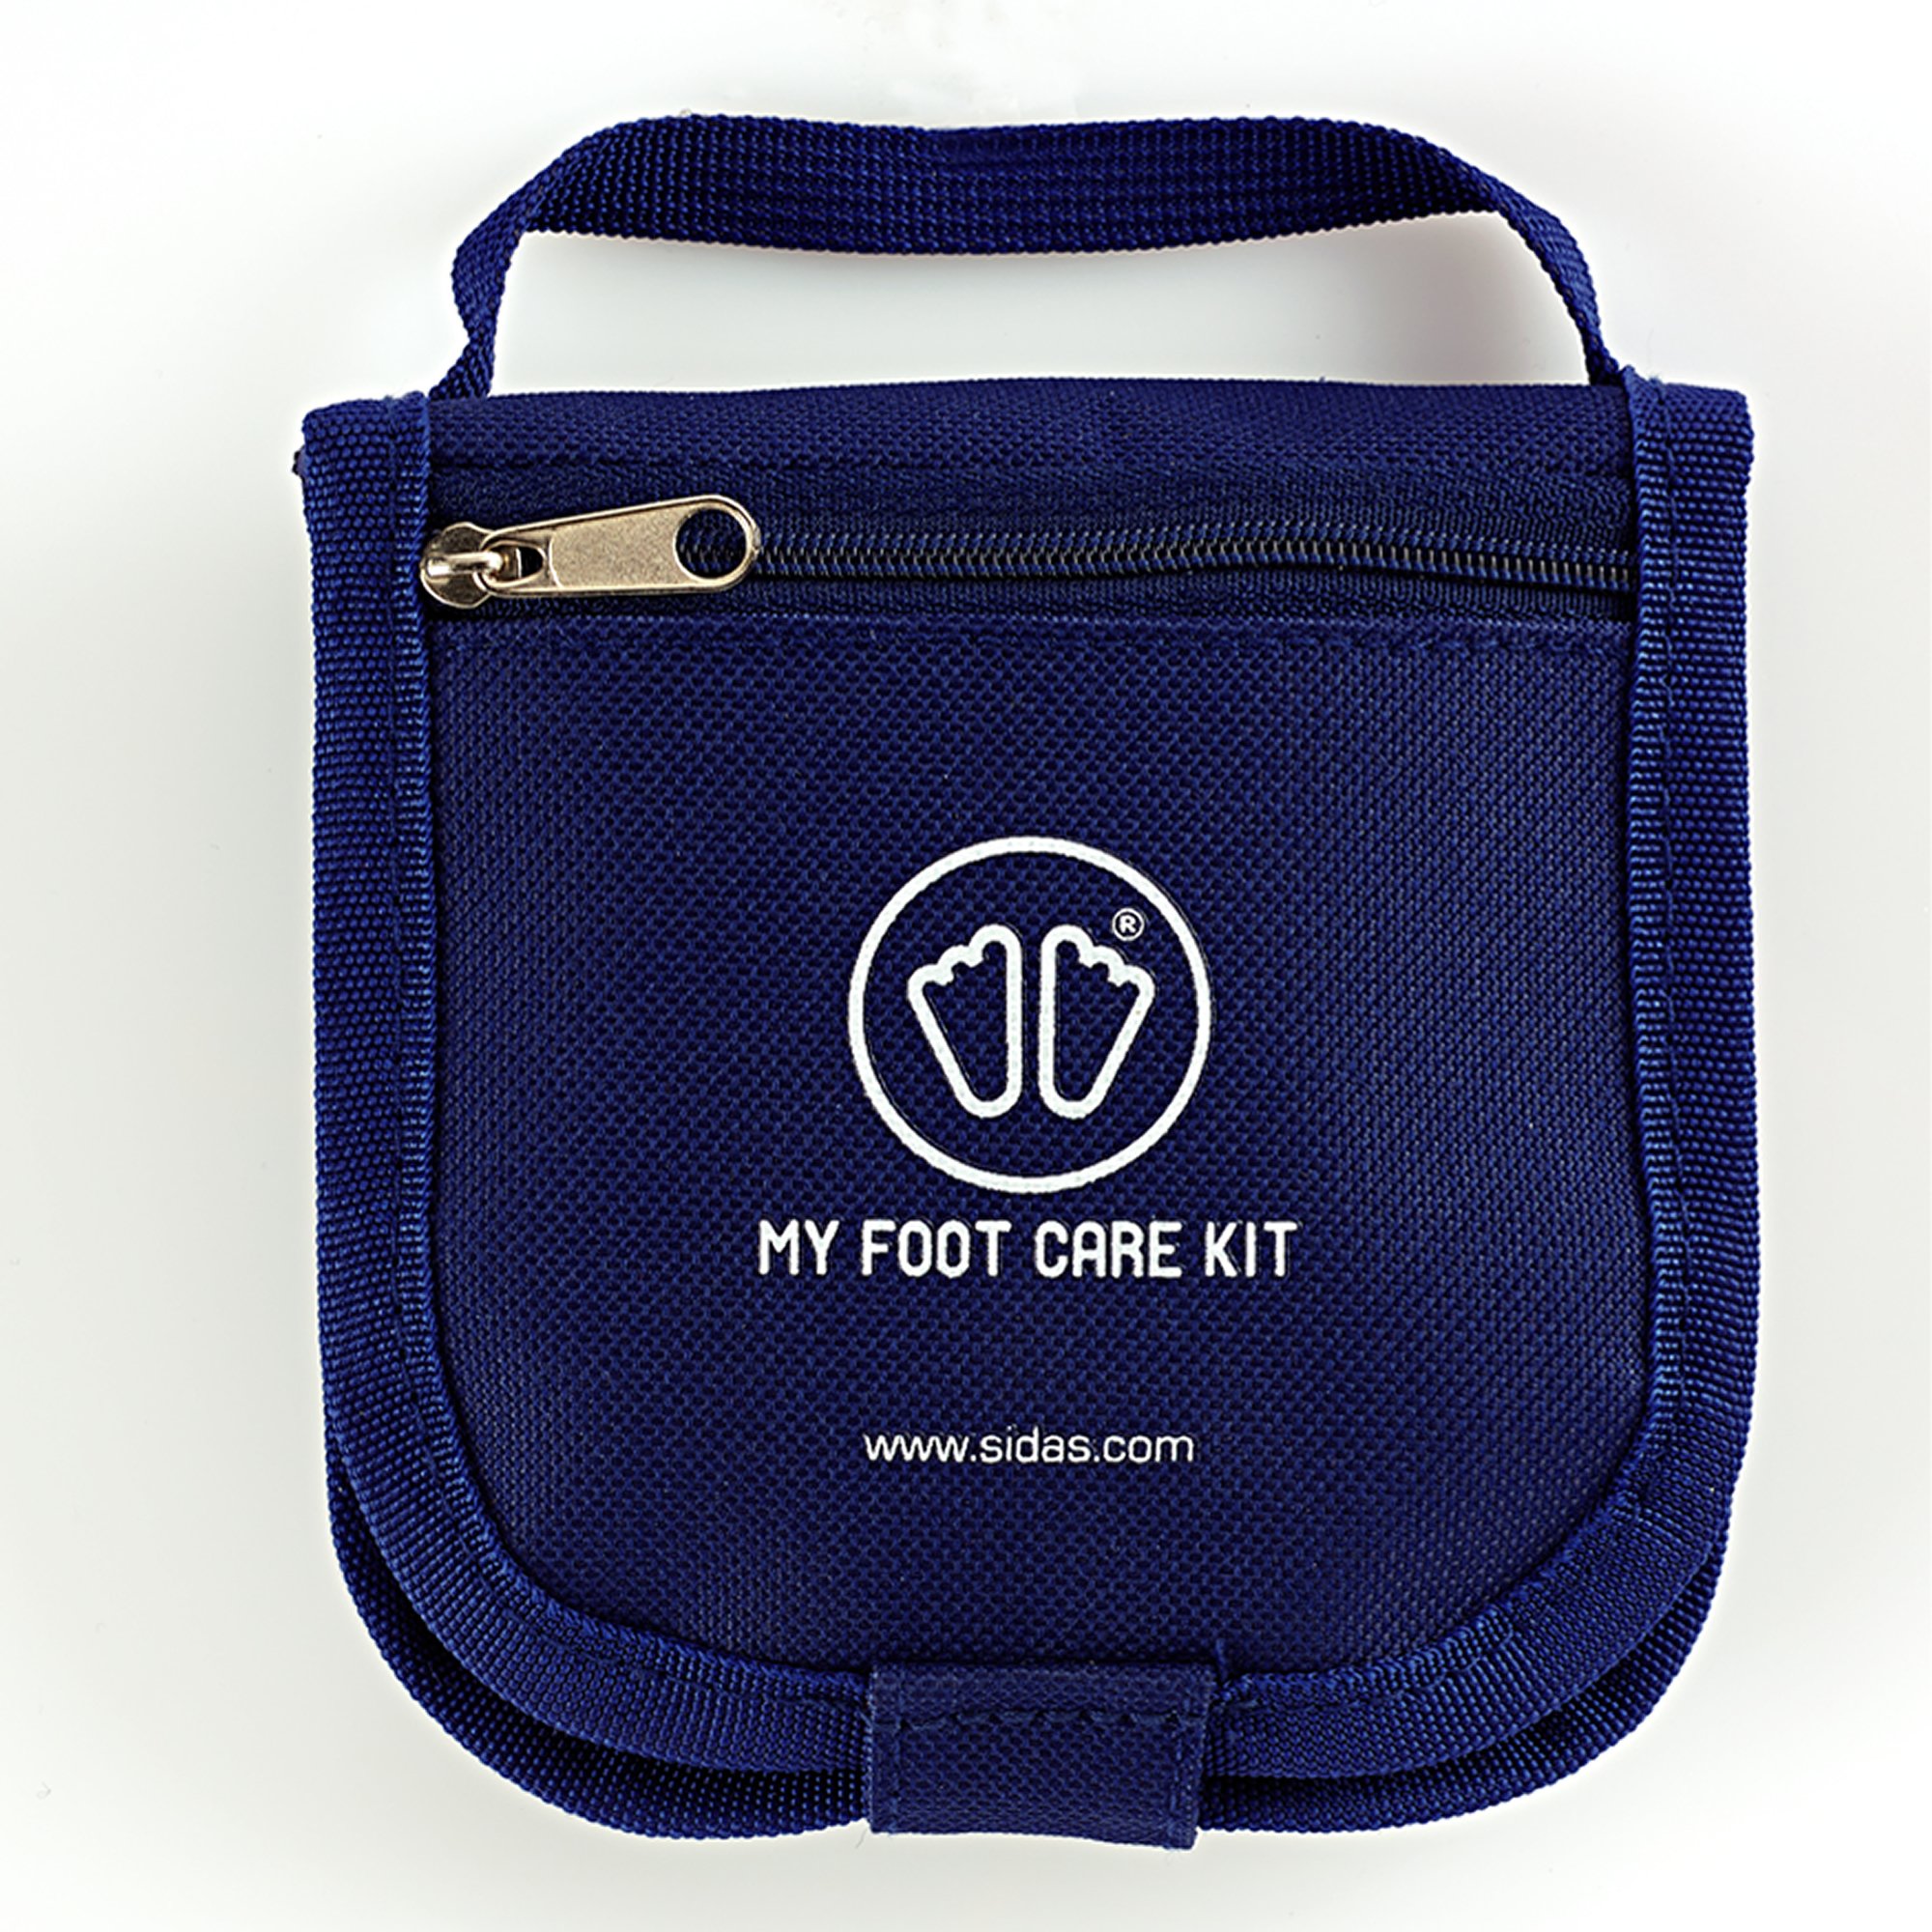 Sidas Foot Care Kit